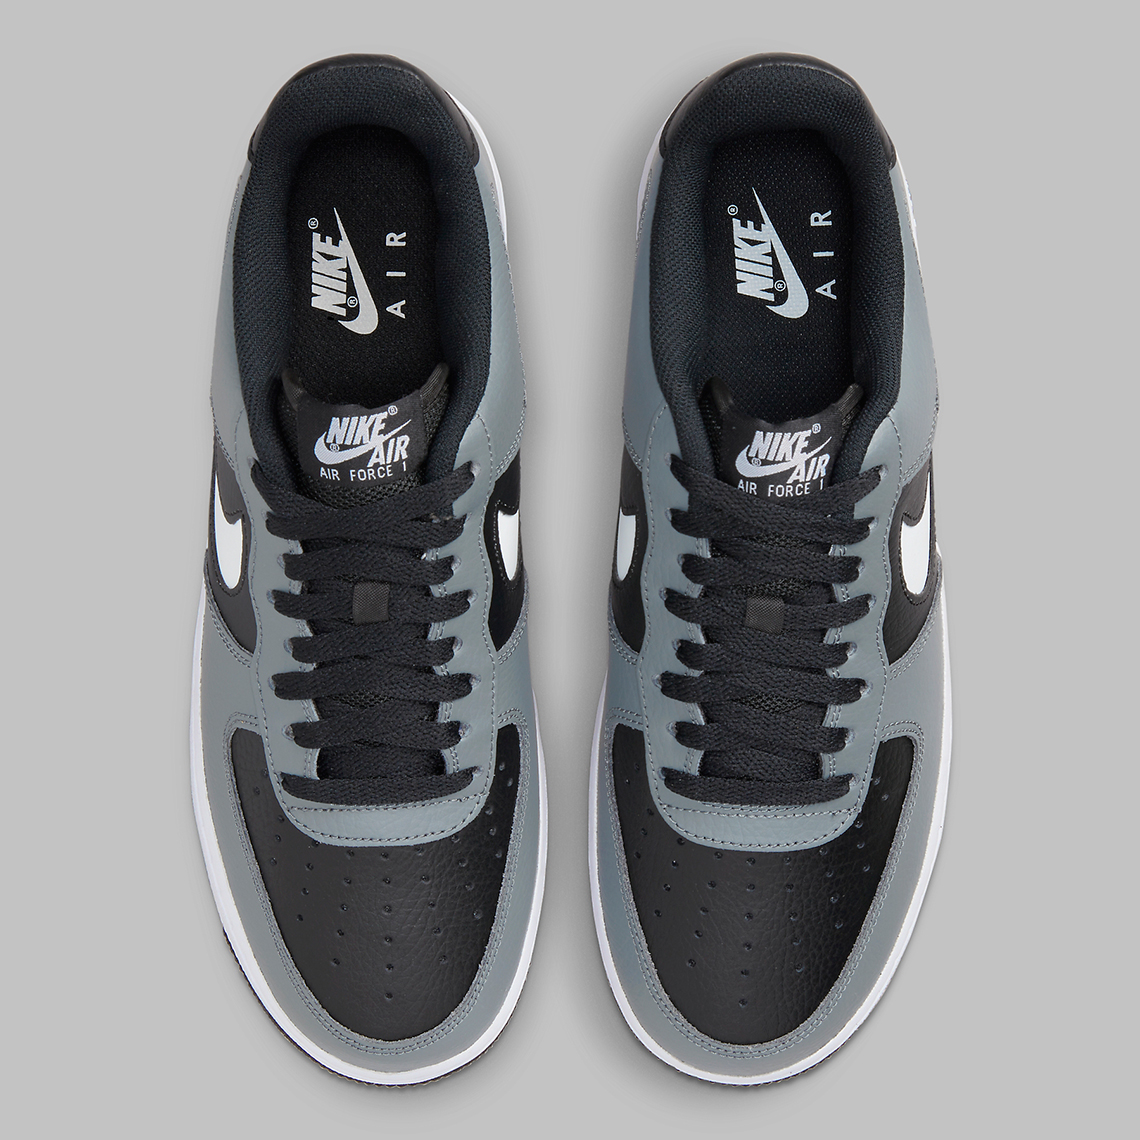 Nike Air Force 1 Low Grey Black Dv3501 001 Release Date 8